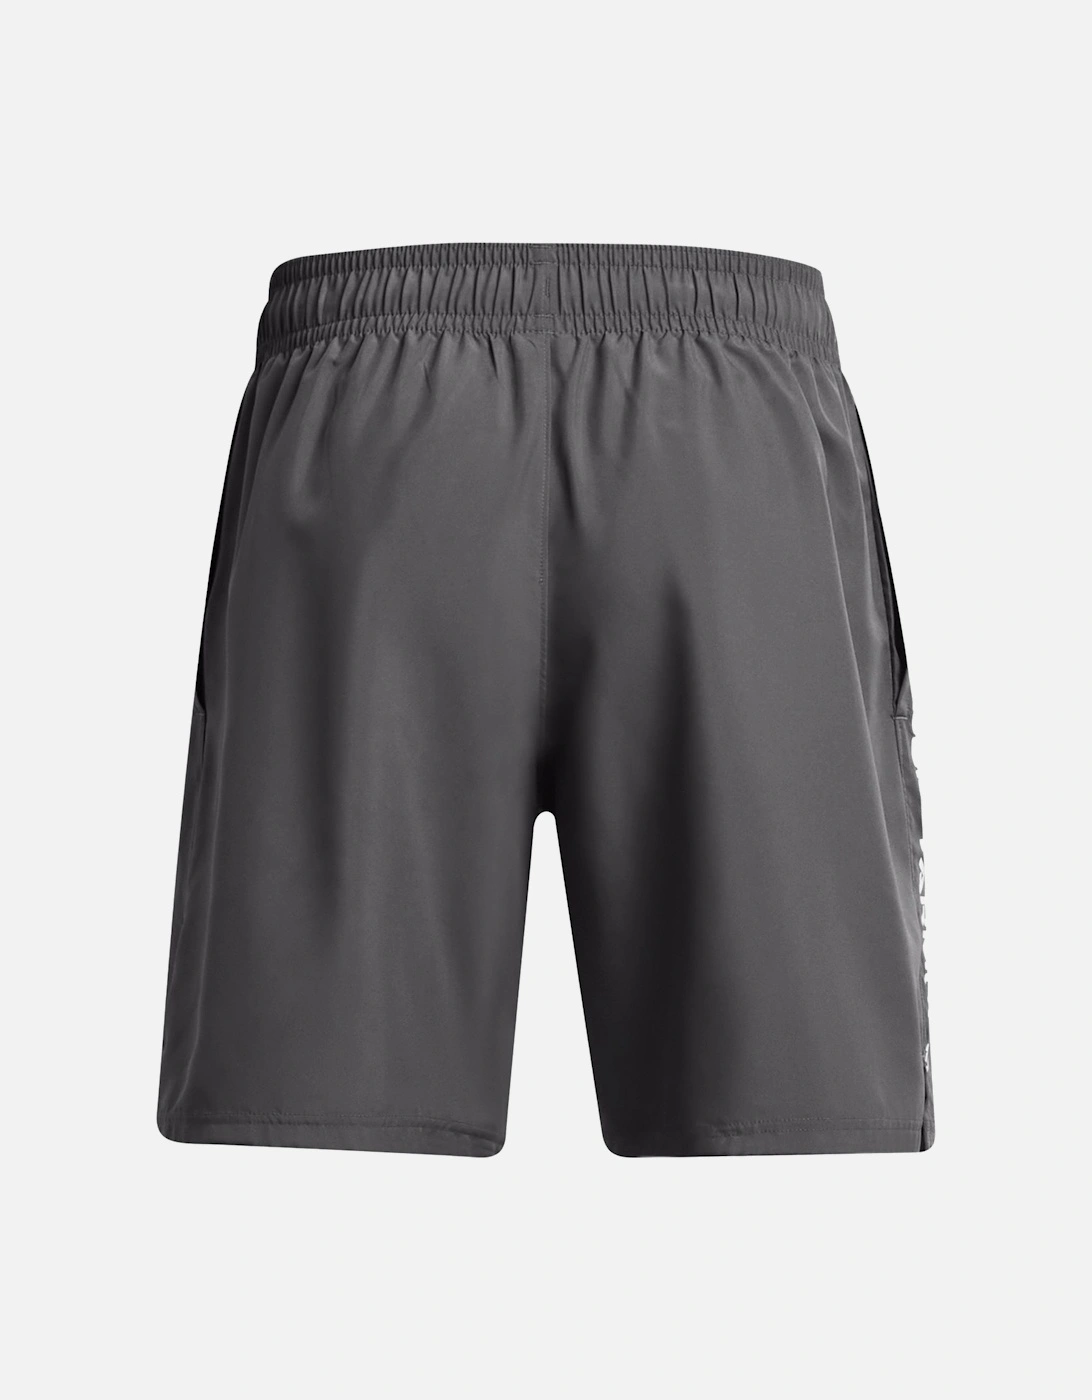 Mens Tech Woven Wordmark Shorts (Dark Grey)